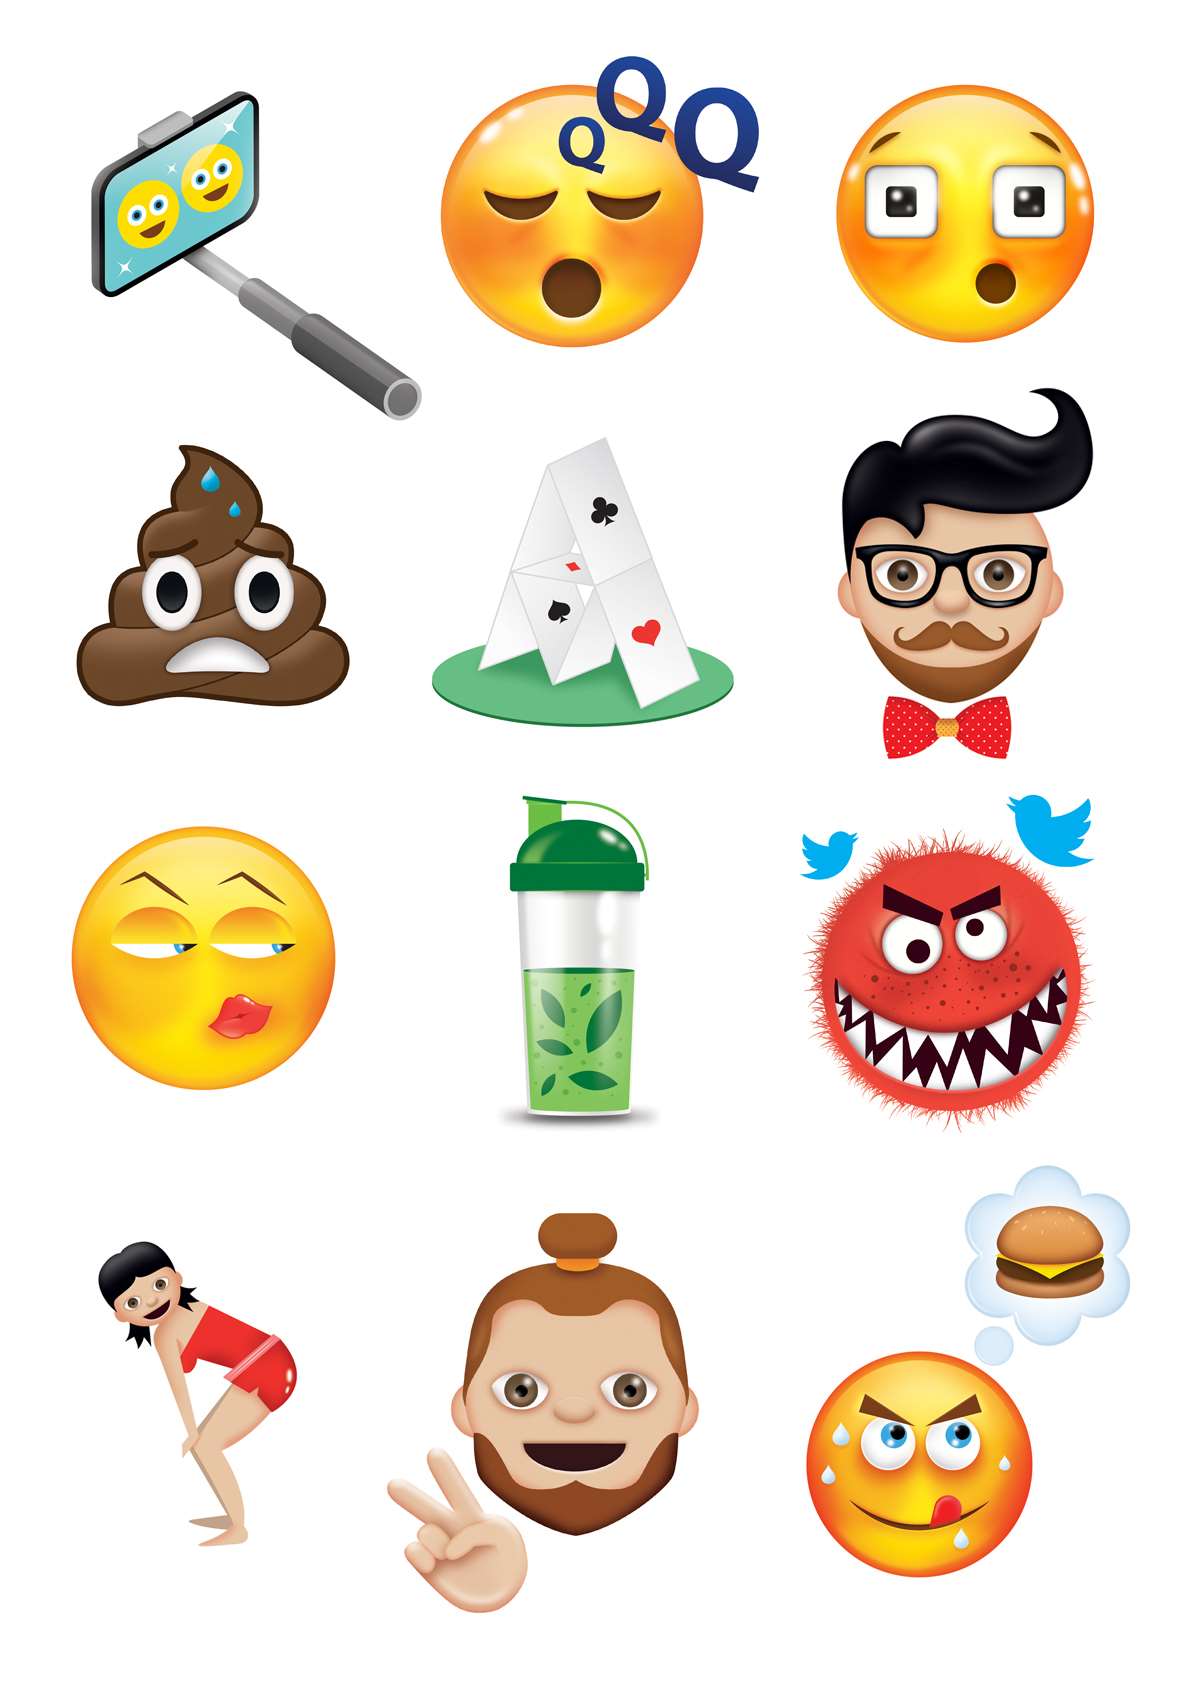 Ahoy There, Digital vector emoji illustrations 